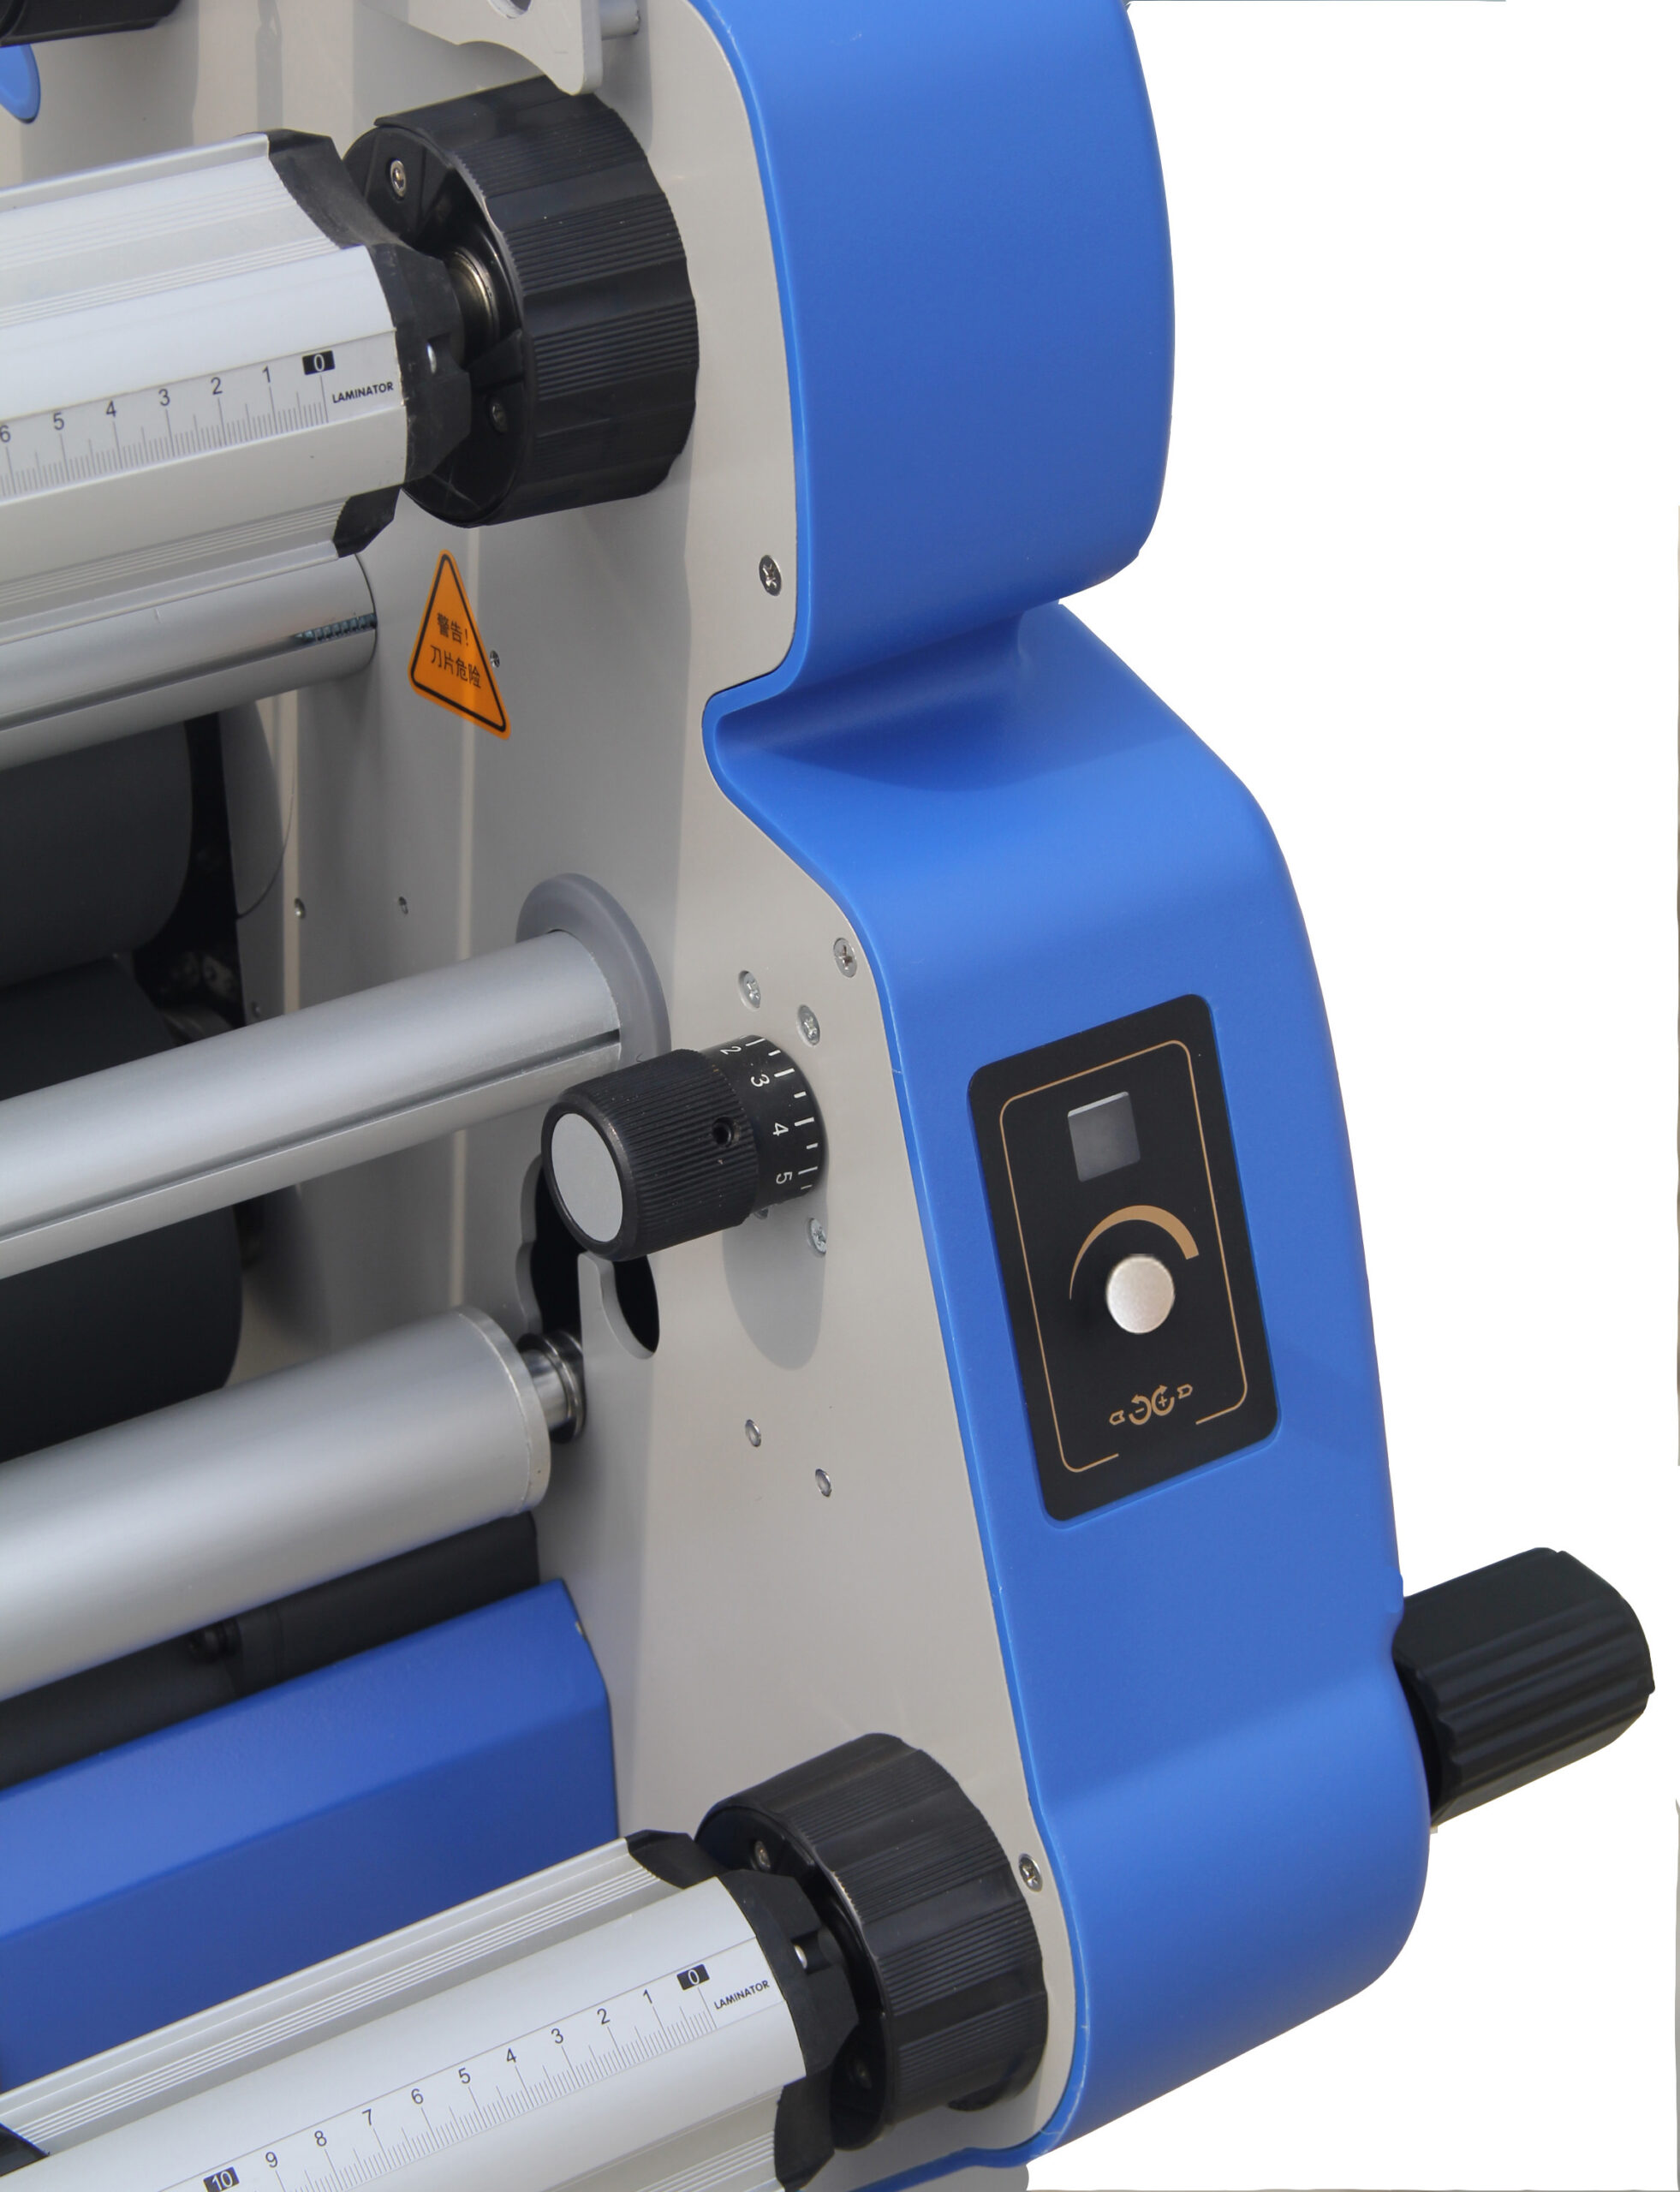 MF1700-M1 PLUS warm roll laminating and cutting machine